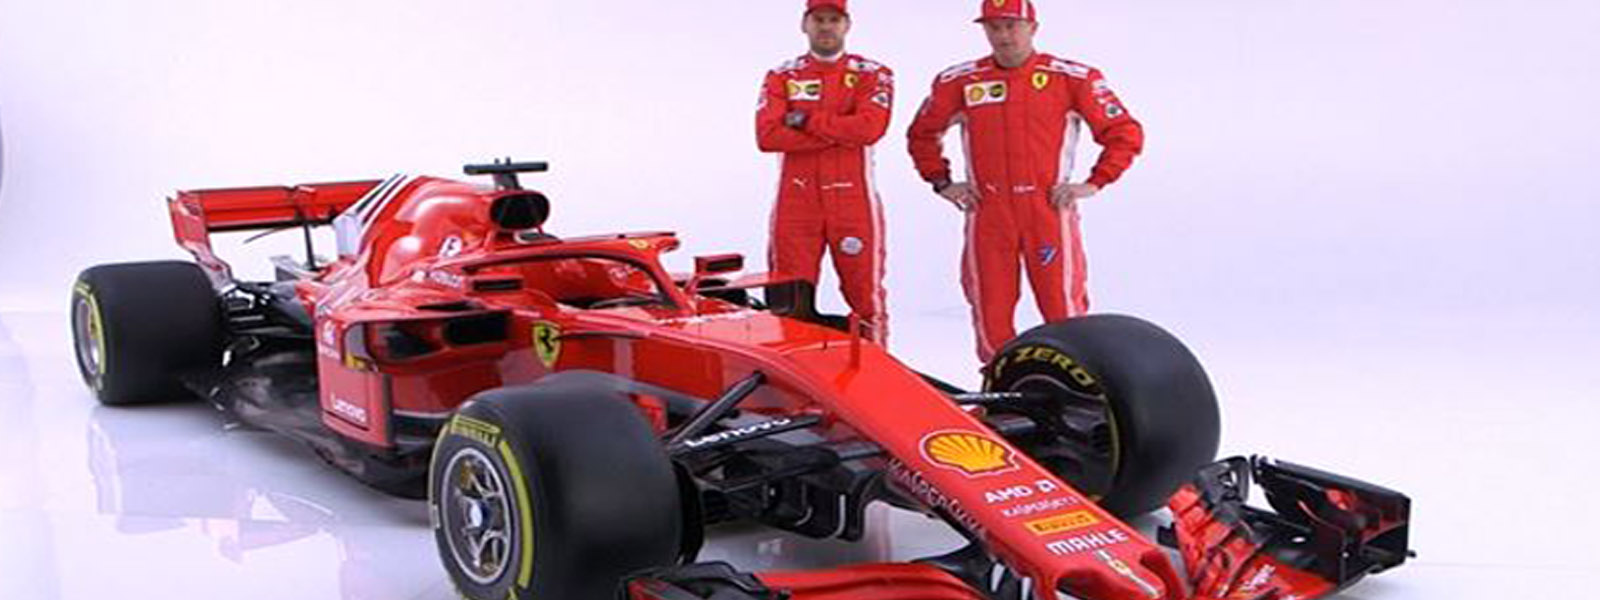 Ferrari reveal their Formula One car for the 2018 